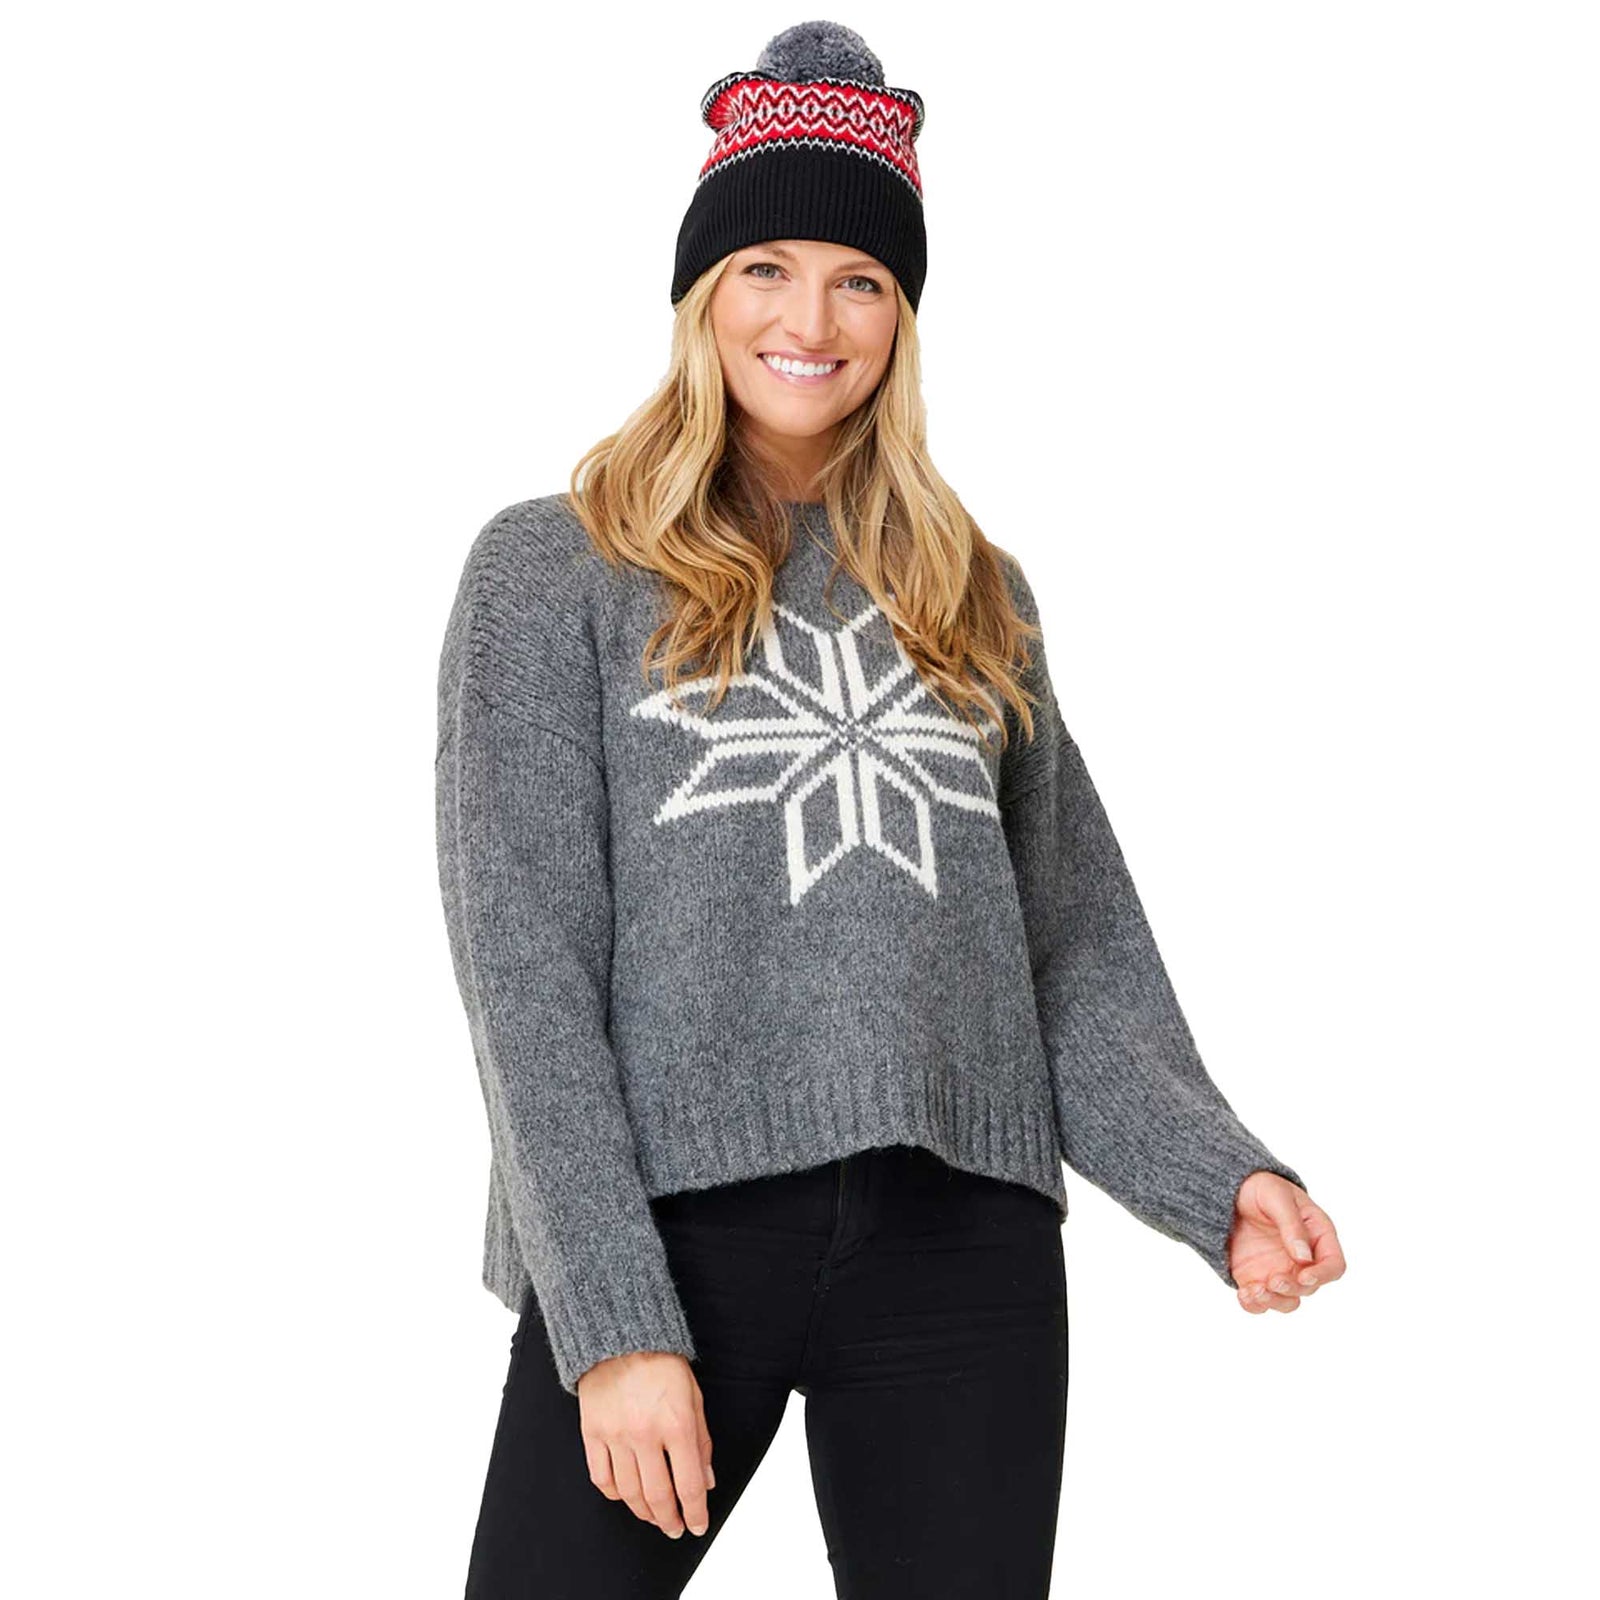 Krimson Klover Women's Snowflake Pullover Sweater 2024 CHARCOAL